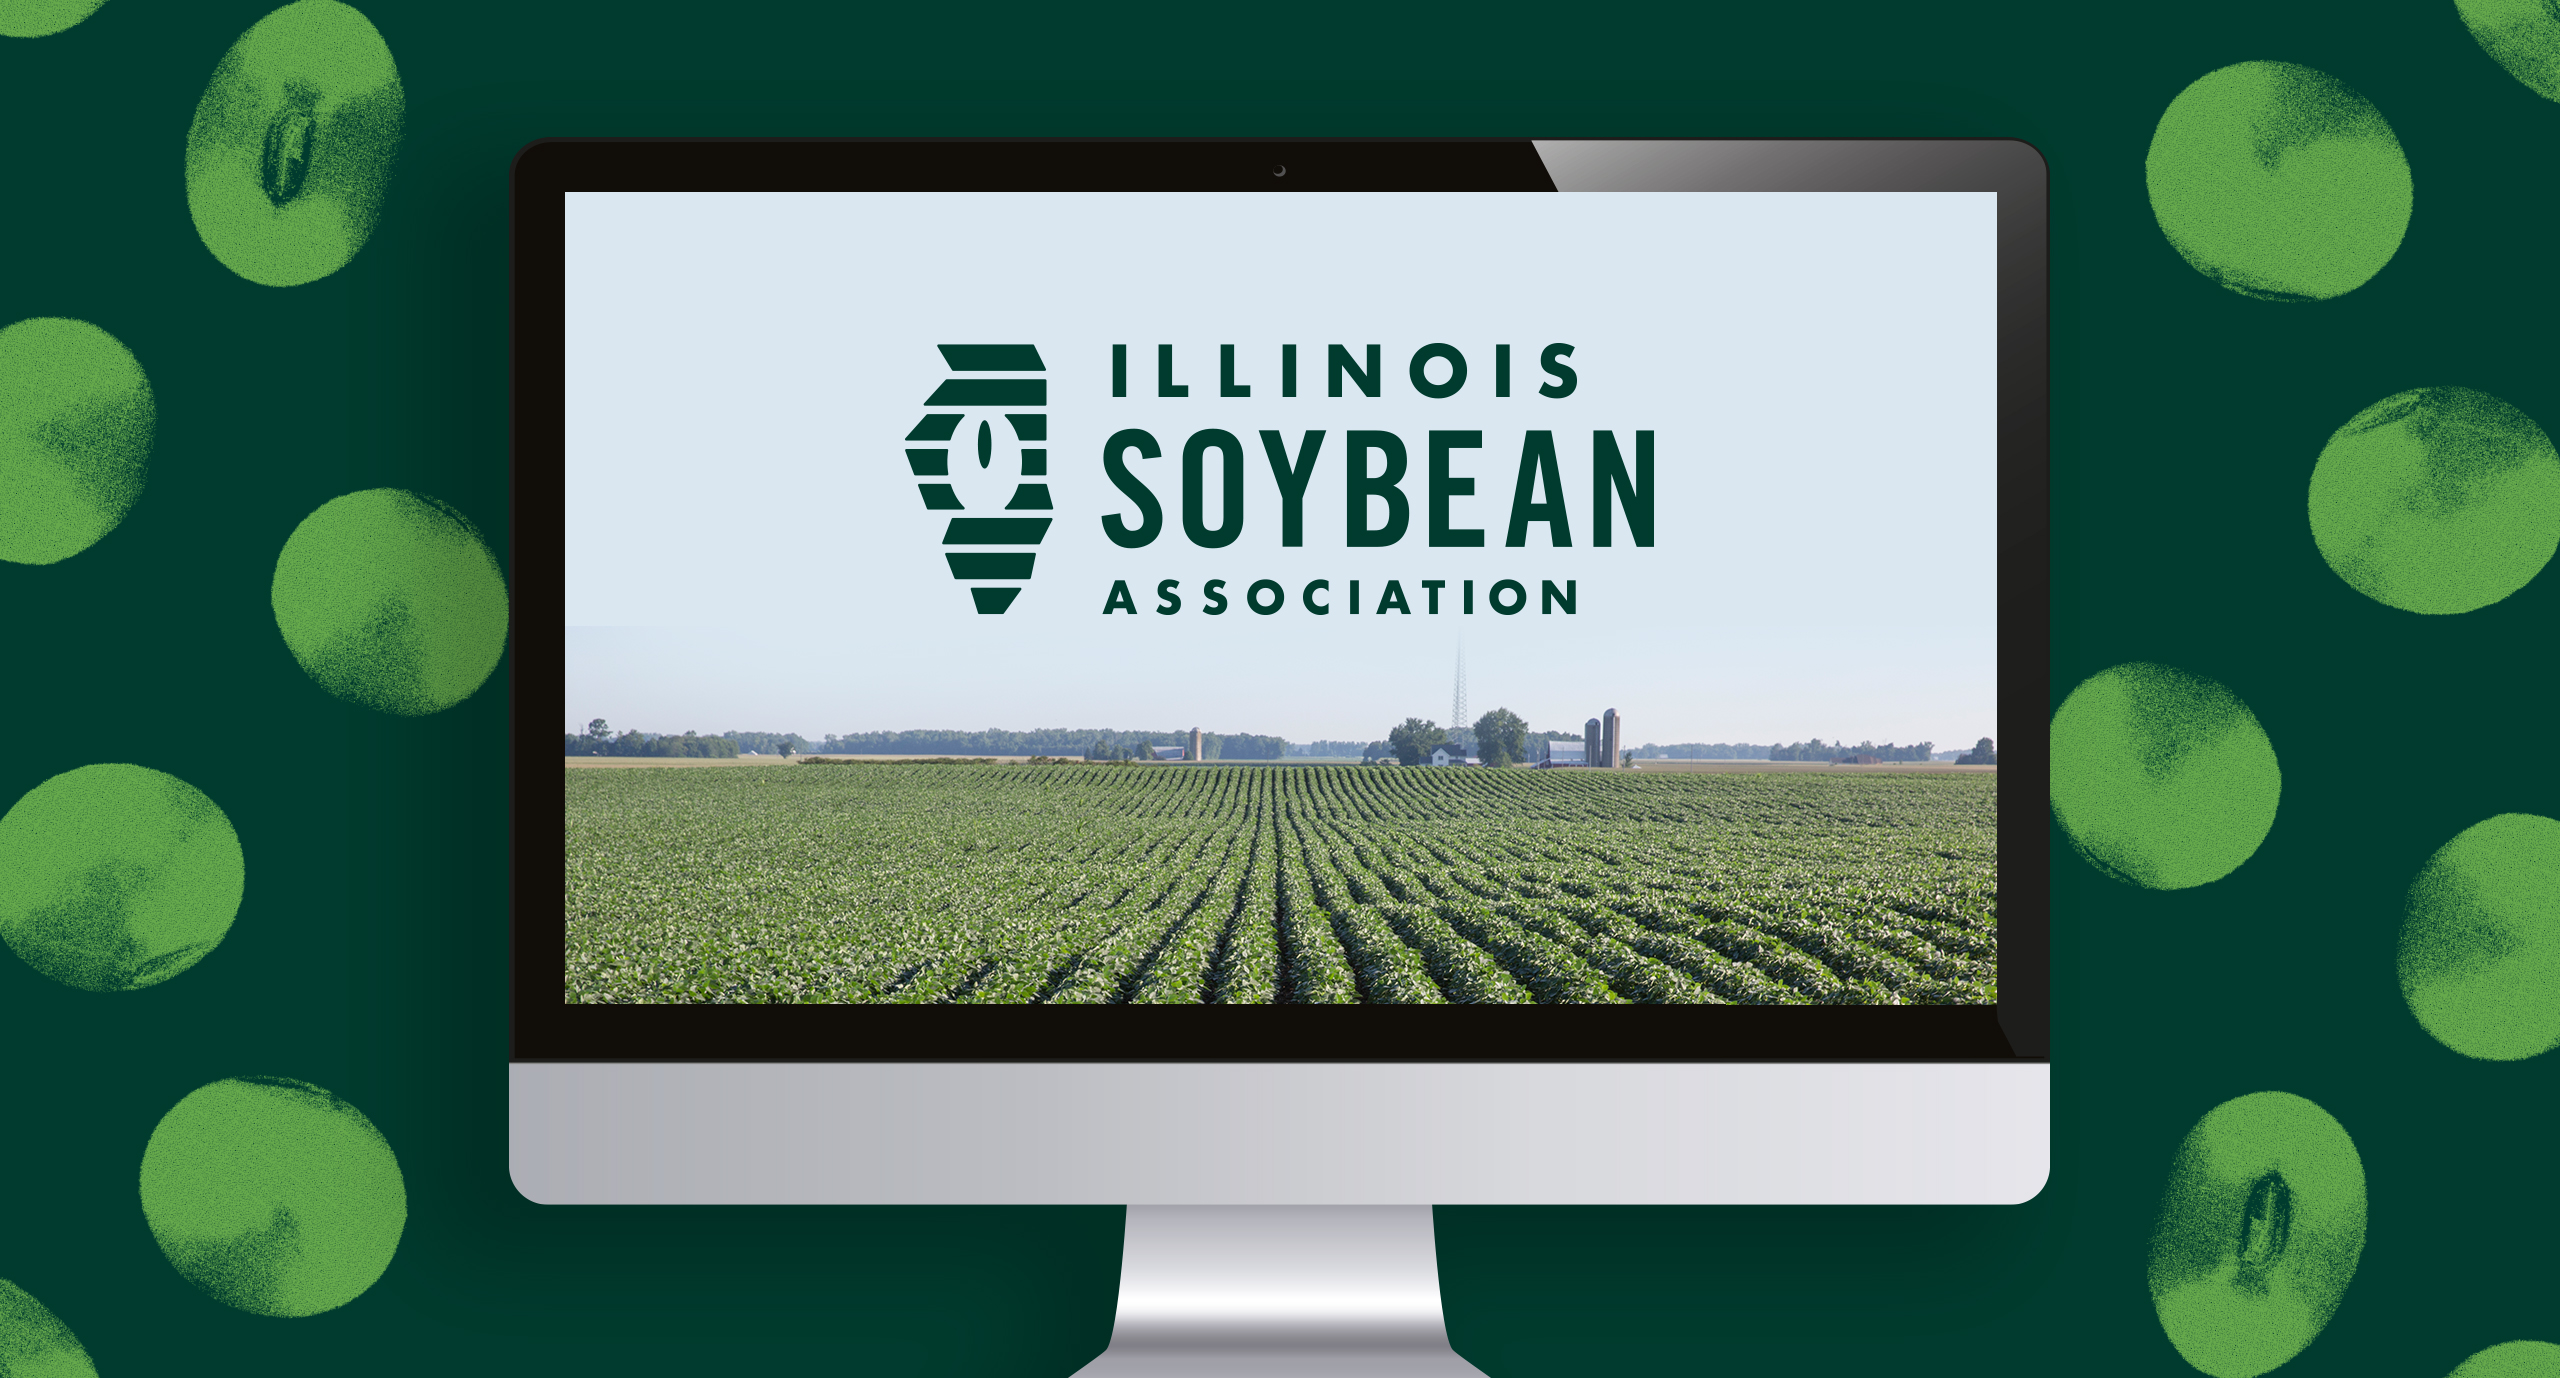 Illinois Soybean Association website redesign